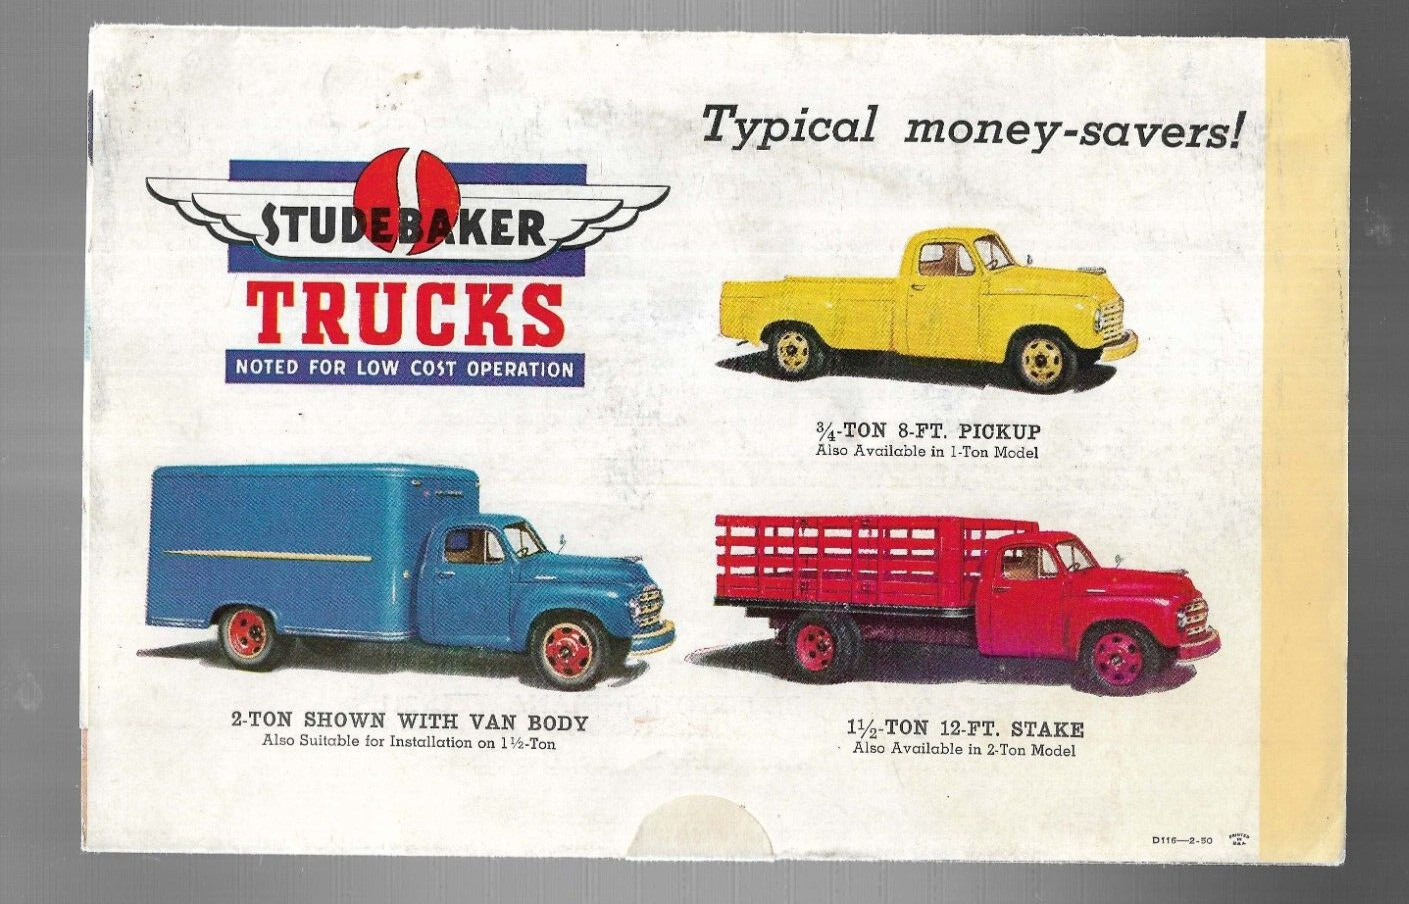 Original 1950 Studebaker Trucks Mailing Brochure Steffen Motor Sales Bluffton IN